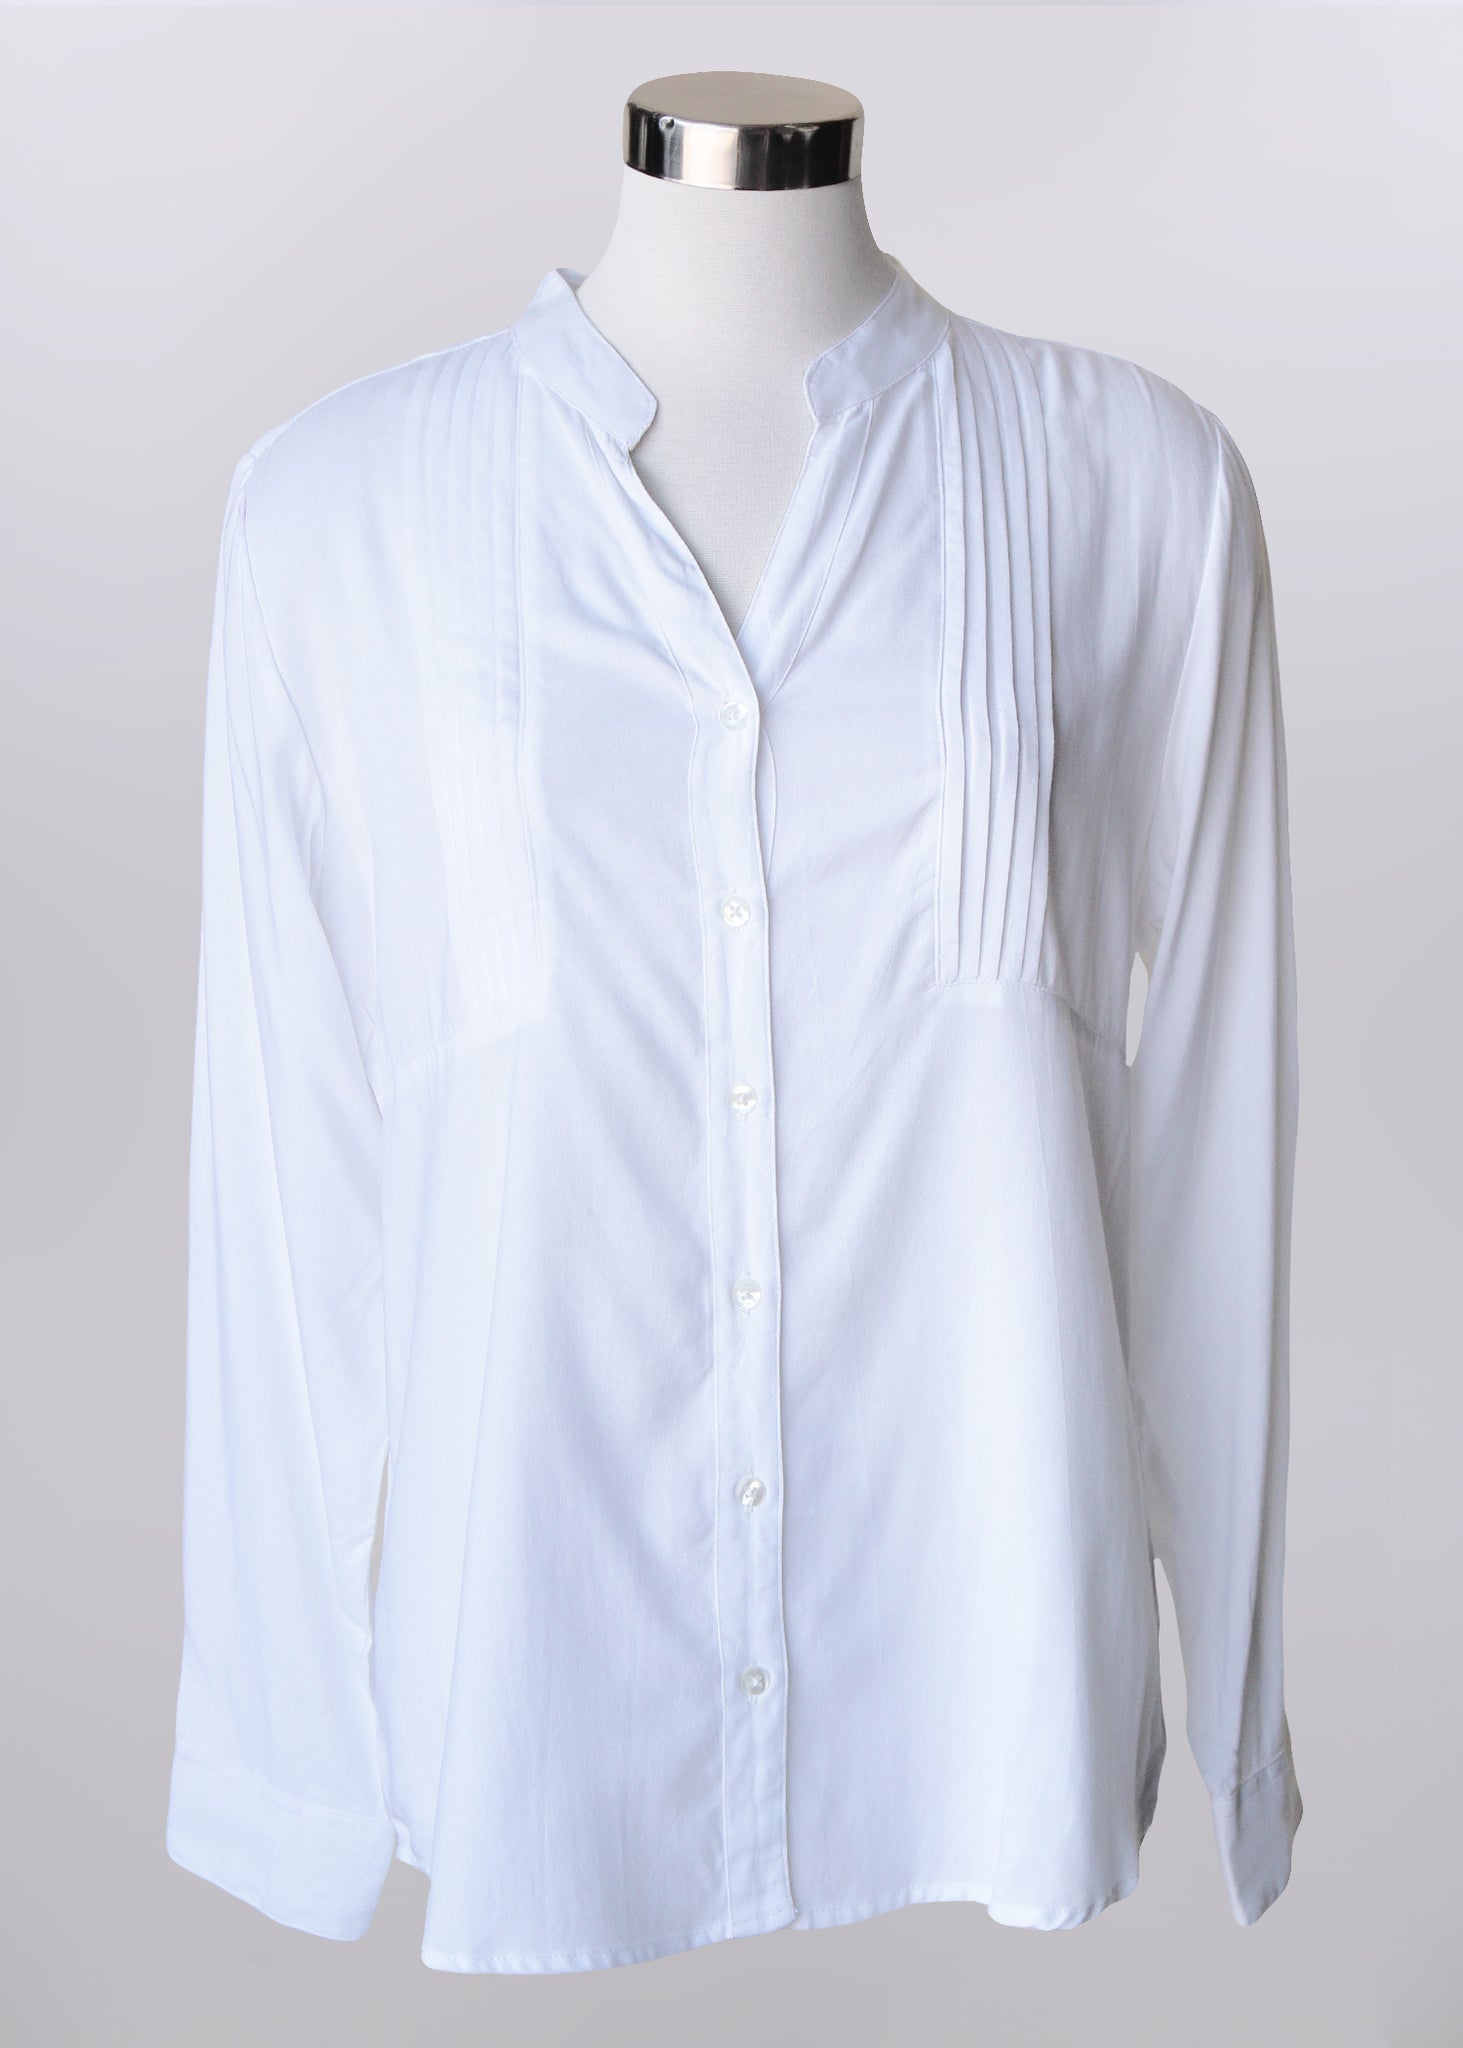 Keren Hart Pleated Button Front L/S Shirt White